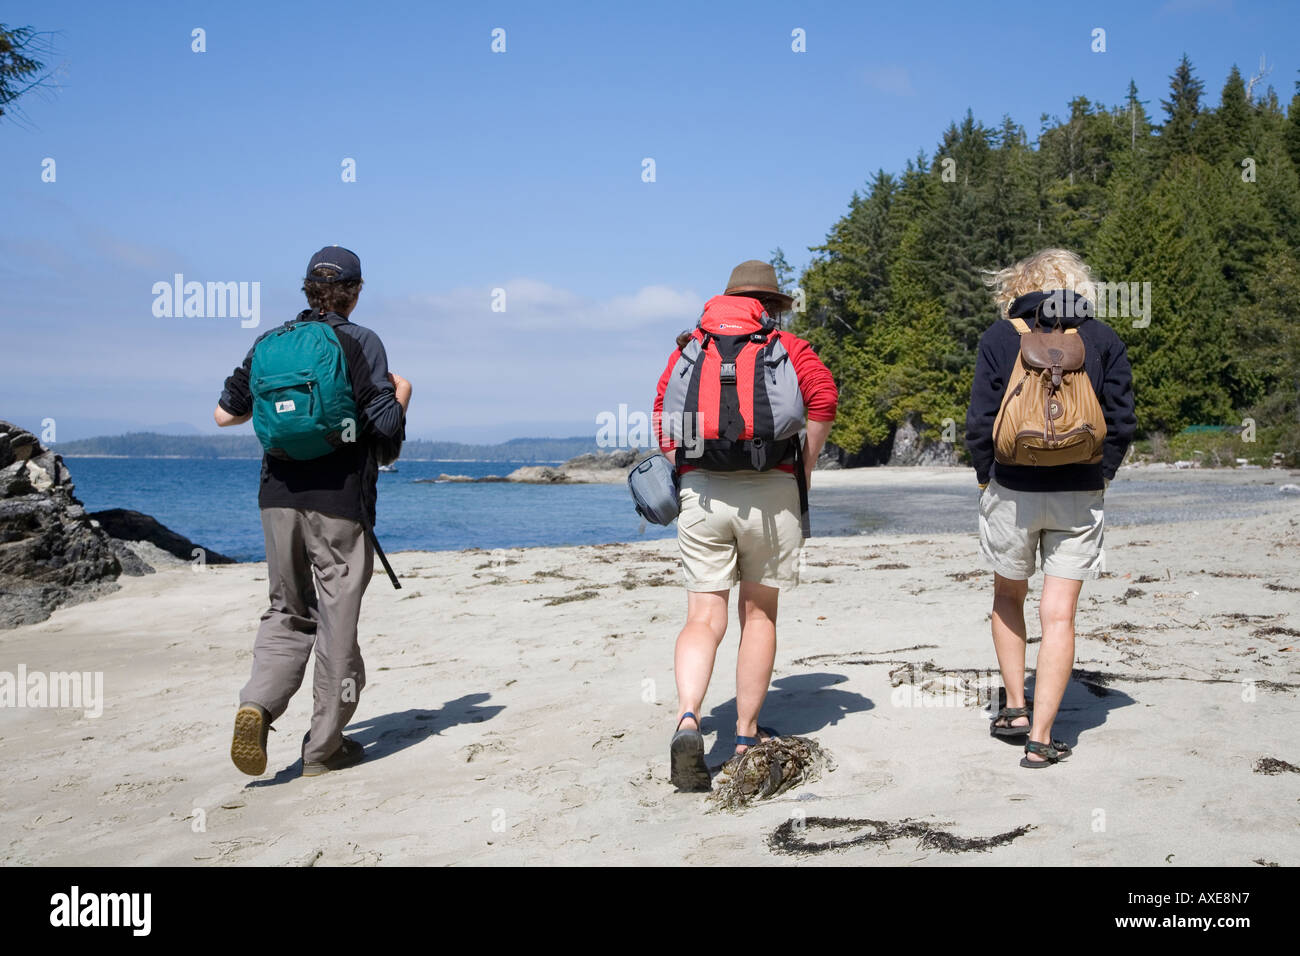 Three people walking on Brady beach Bamfirth west coast of Vancouver island Canada Stock Photo